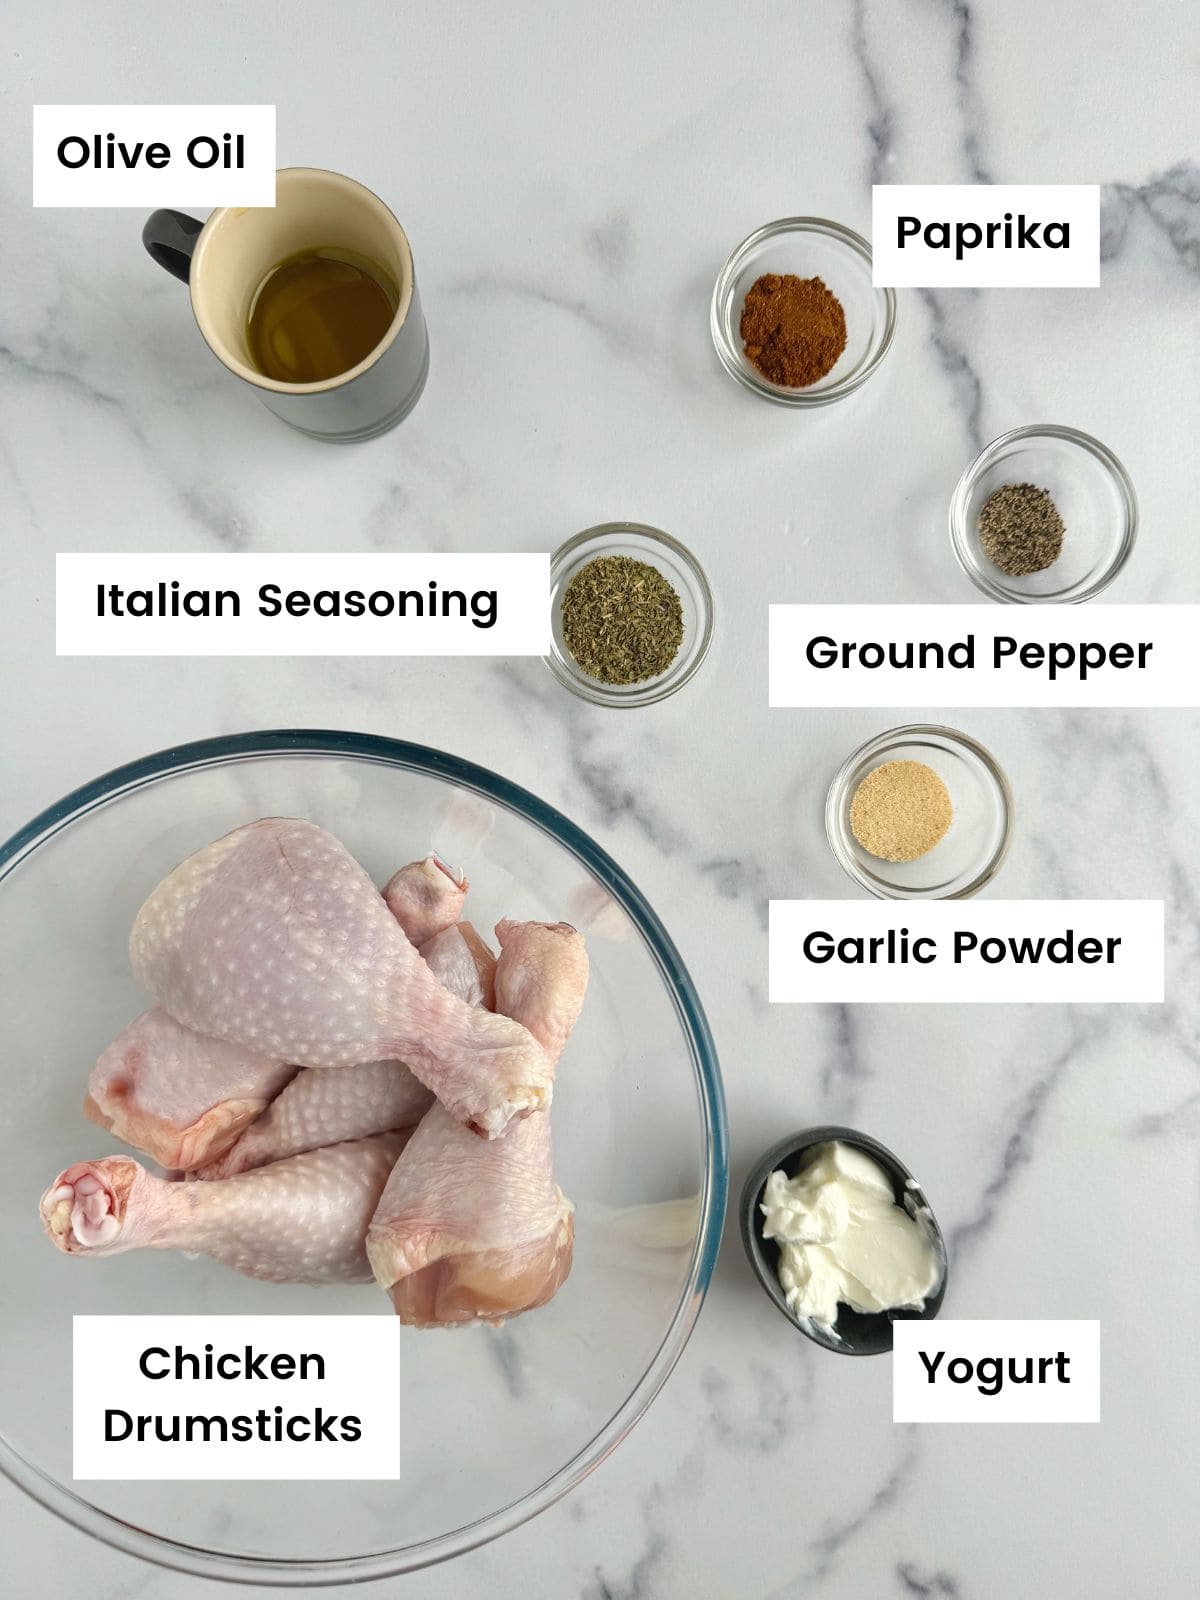 Ingredients for paprika chicken drumsticks for kids.